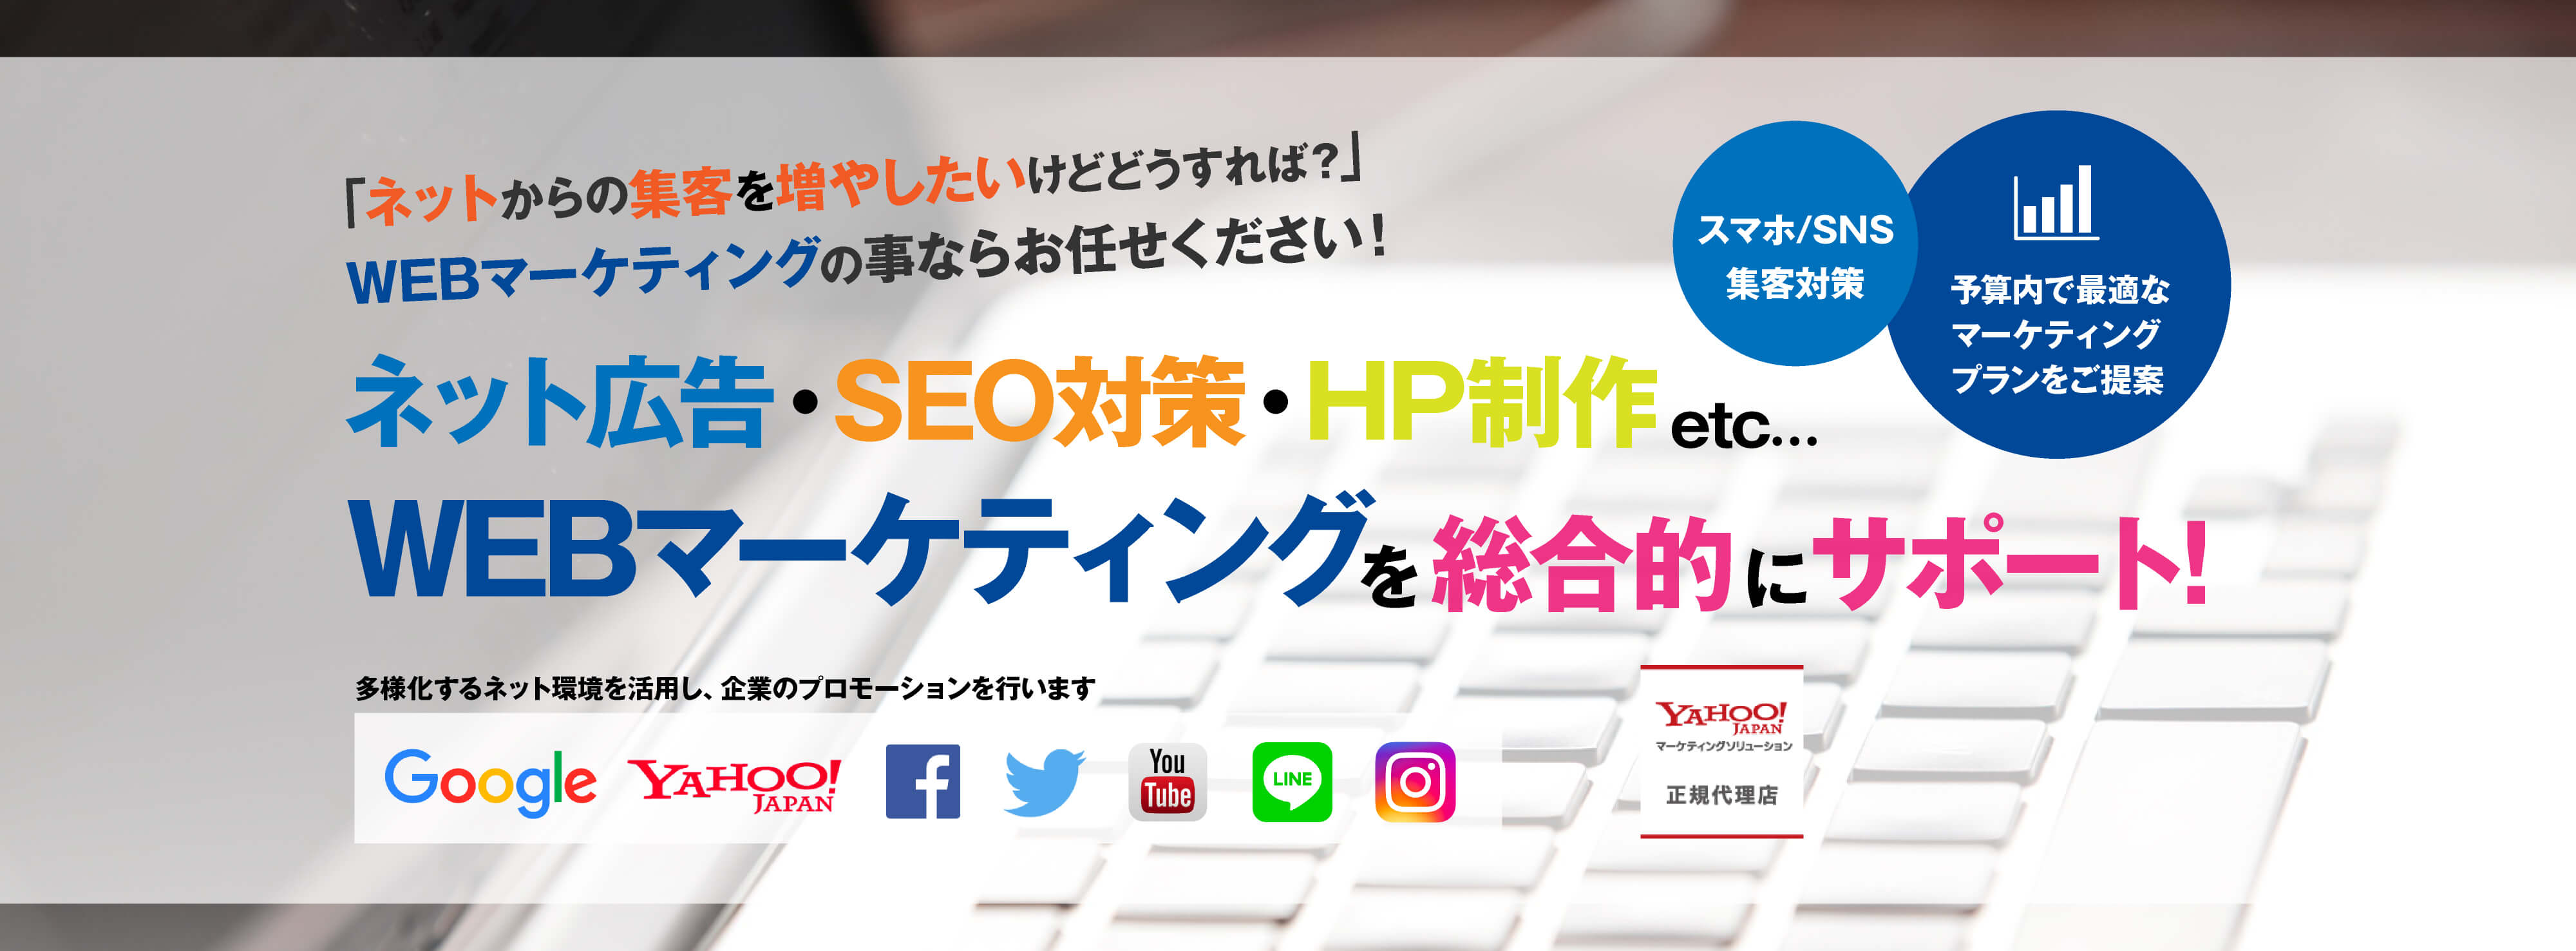 webマーケティング・webコンサルティングの専門会社です。google・yahooの正規代理店として富山からネット集客を総合的にサポートいたします。